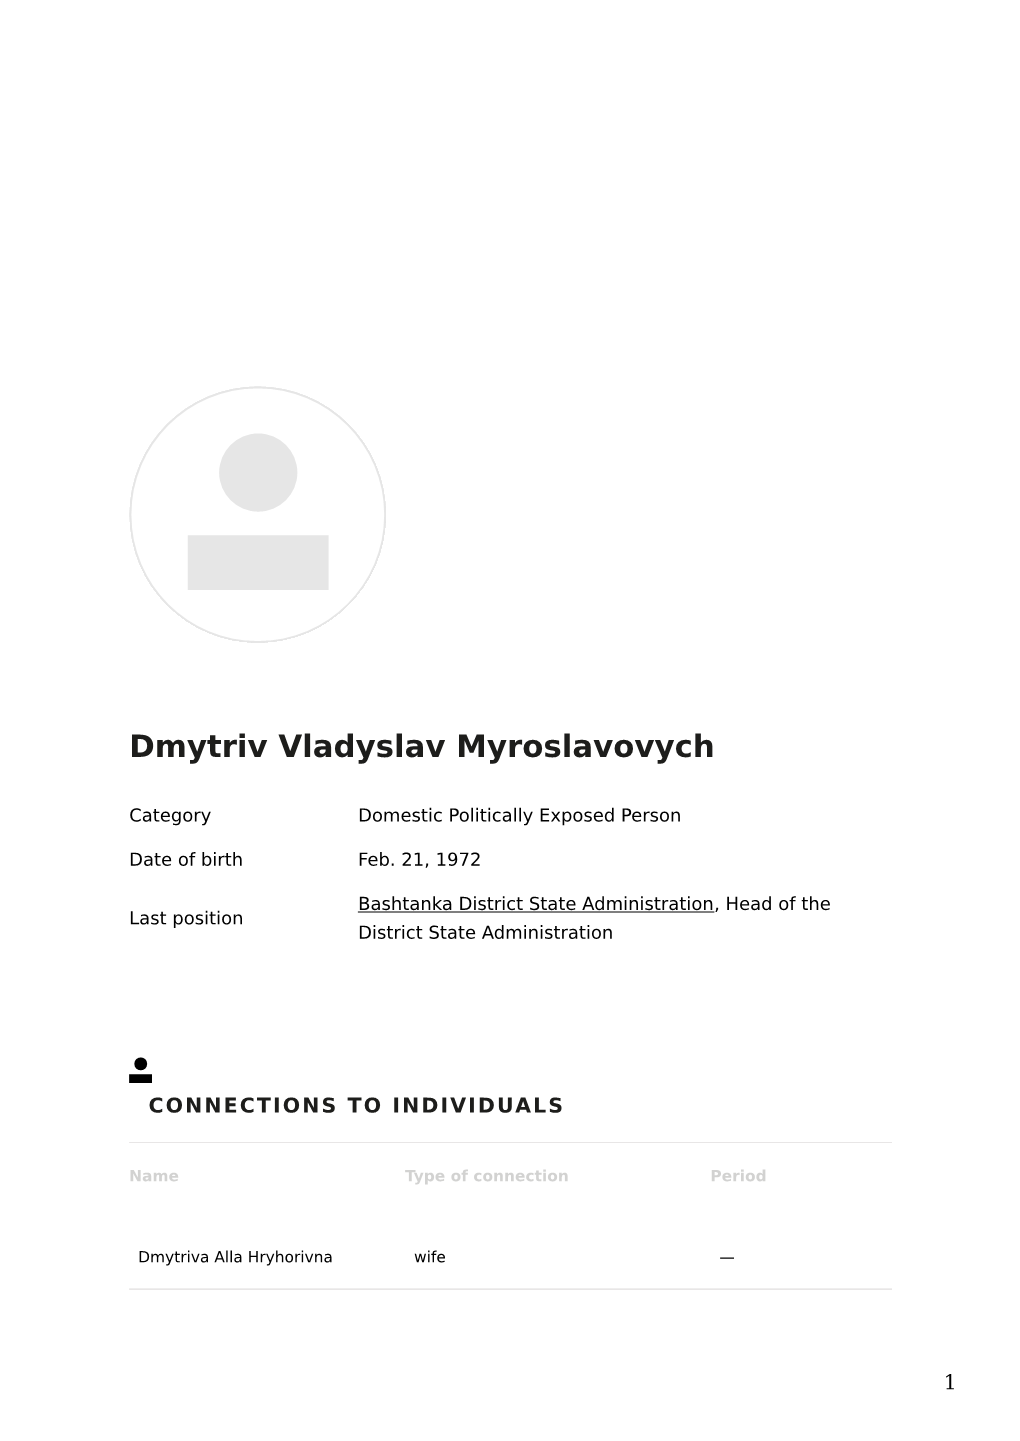 Dossier Dmytriv Vladyslav Myroslavovych, Bashtanka District State